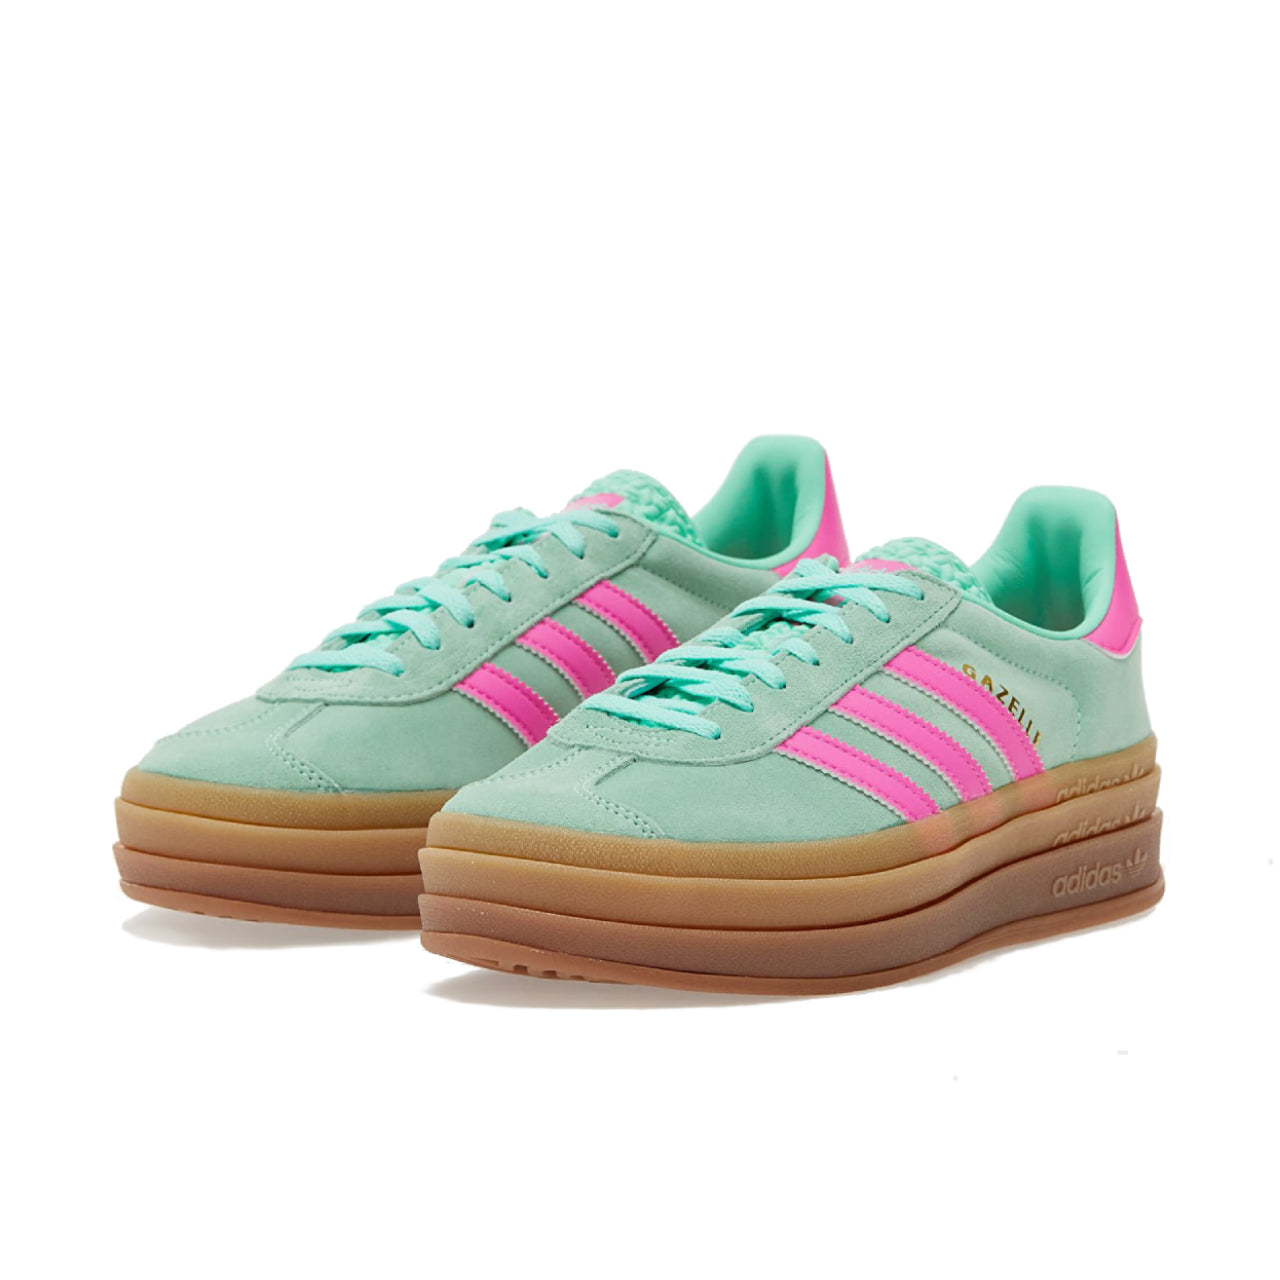 adidas Gazelle Bold Pulse Mint Pink - H06125 - Medial